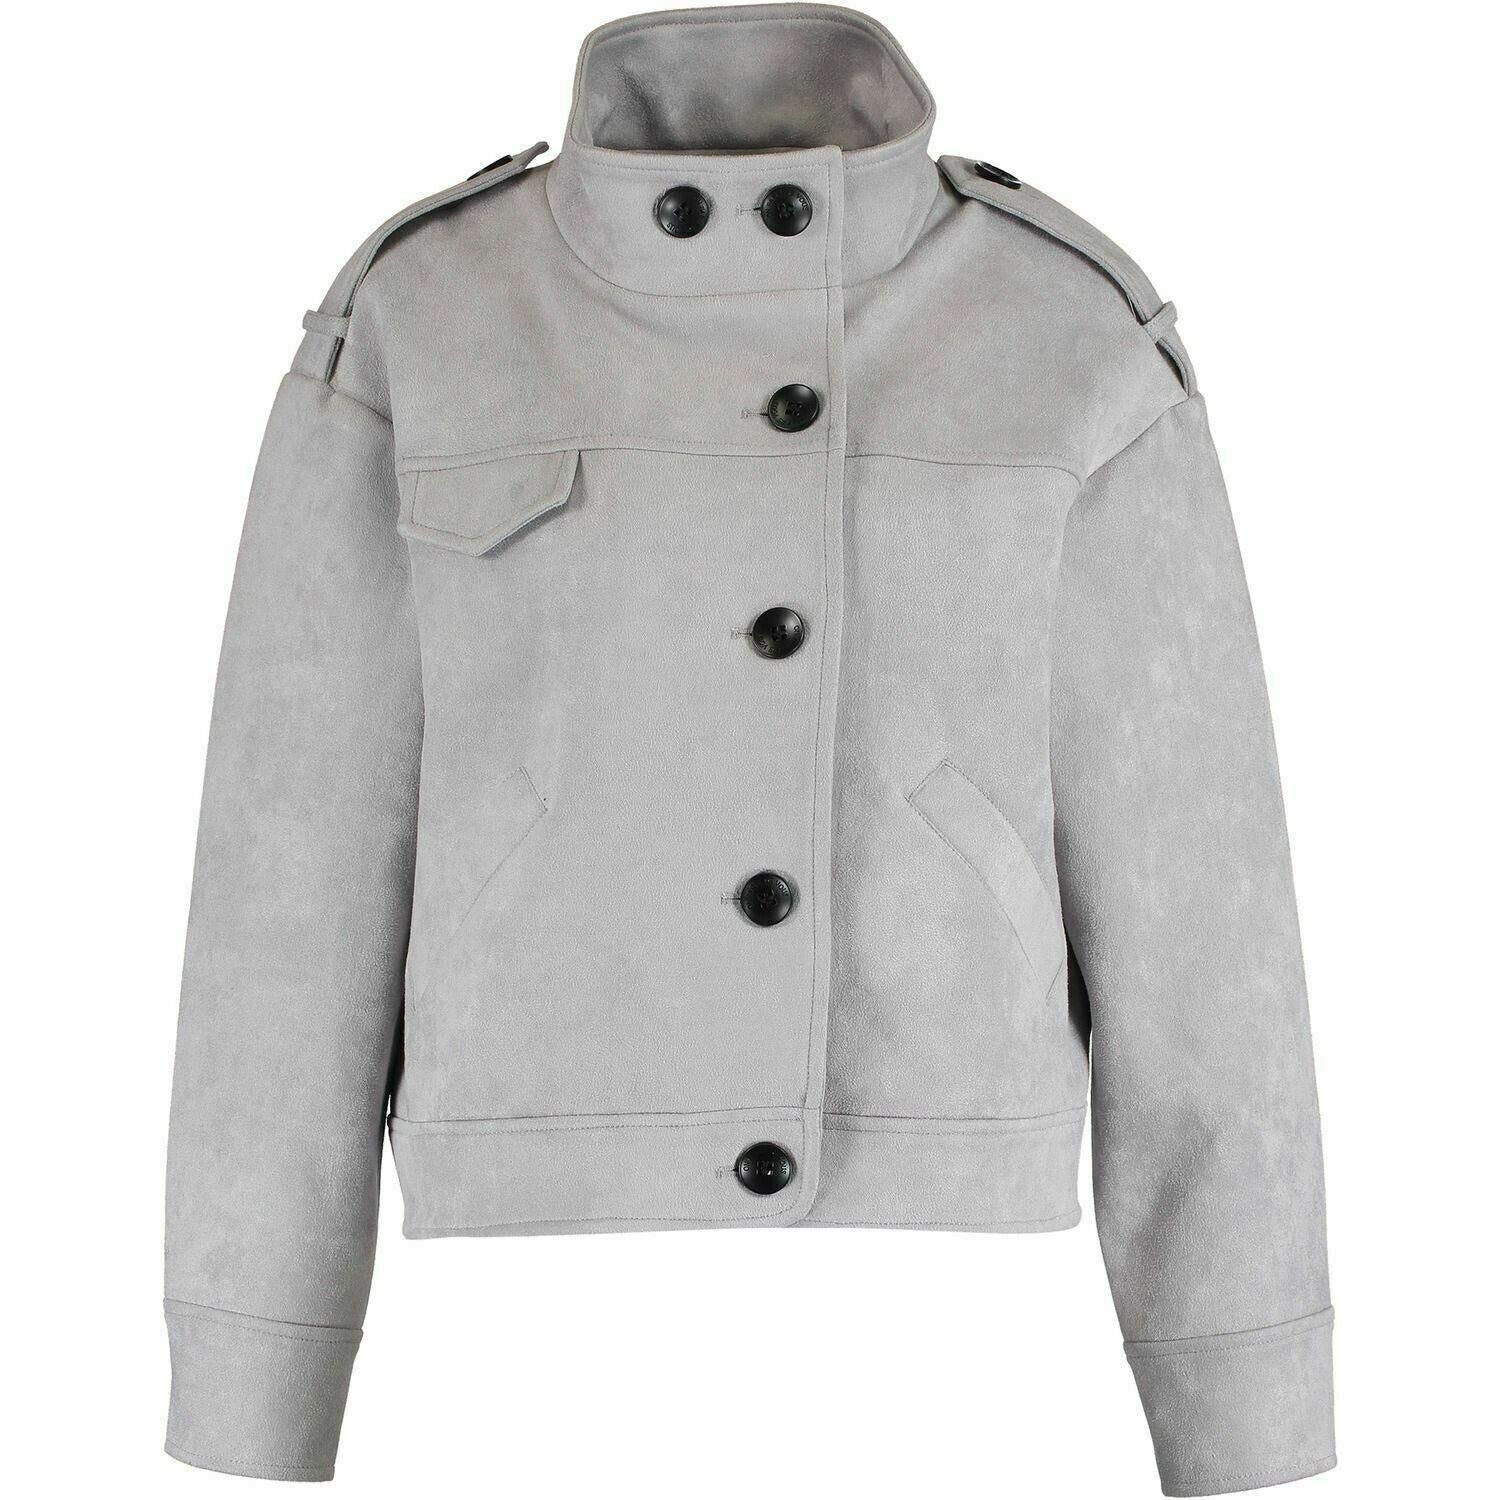 O.P.D.V. ON PARLE DE VOUS Womens Suedette Casual Jacket, Grey, size 4 /UK Large